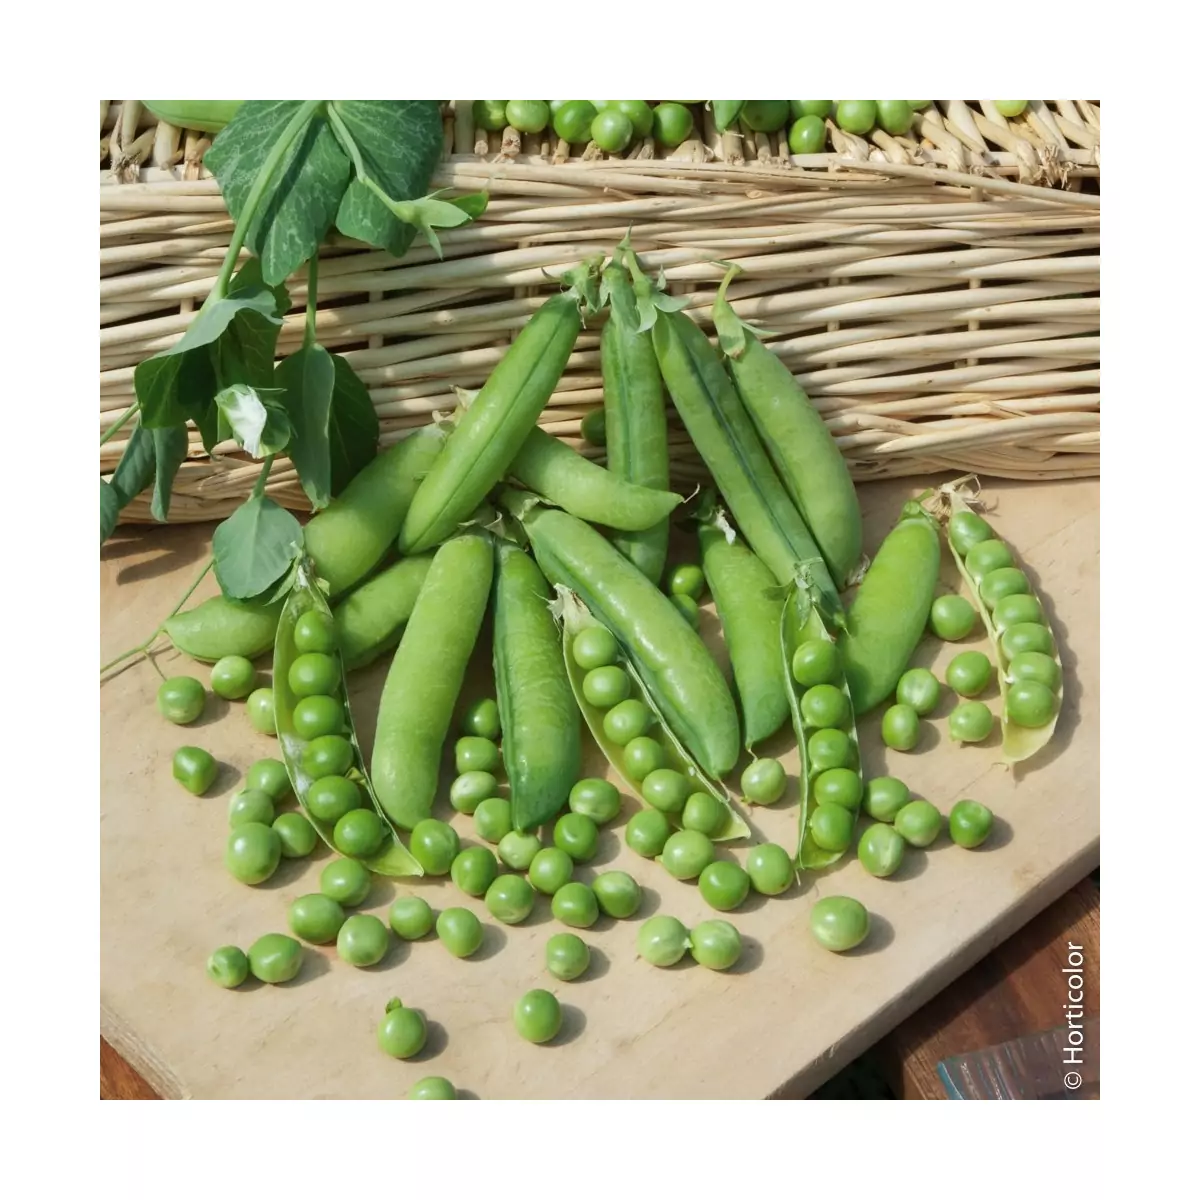 King Pea Seeds Canned - 5 kg bag